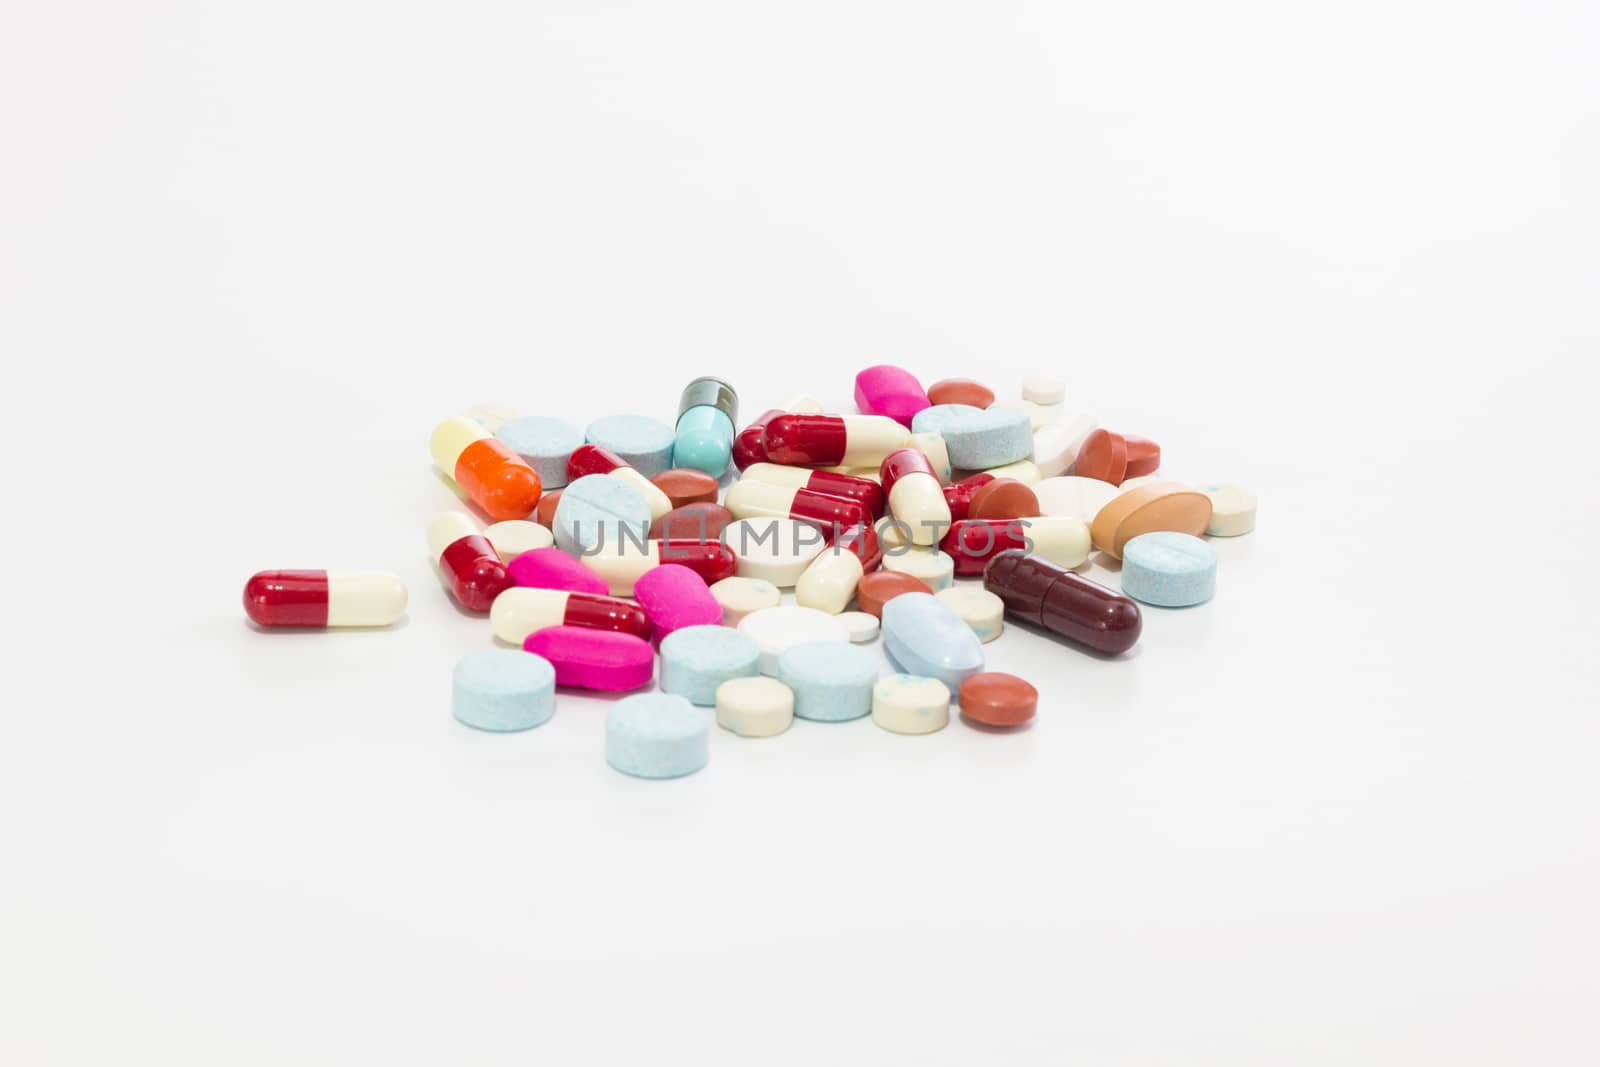 Multicolor antibiotics tablets and capsules on white background. by SaitanSainam